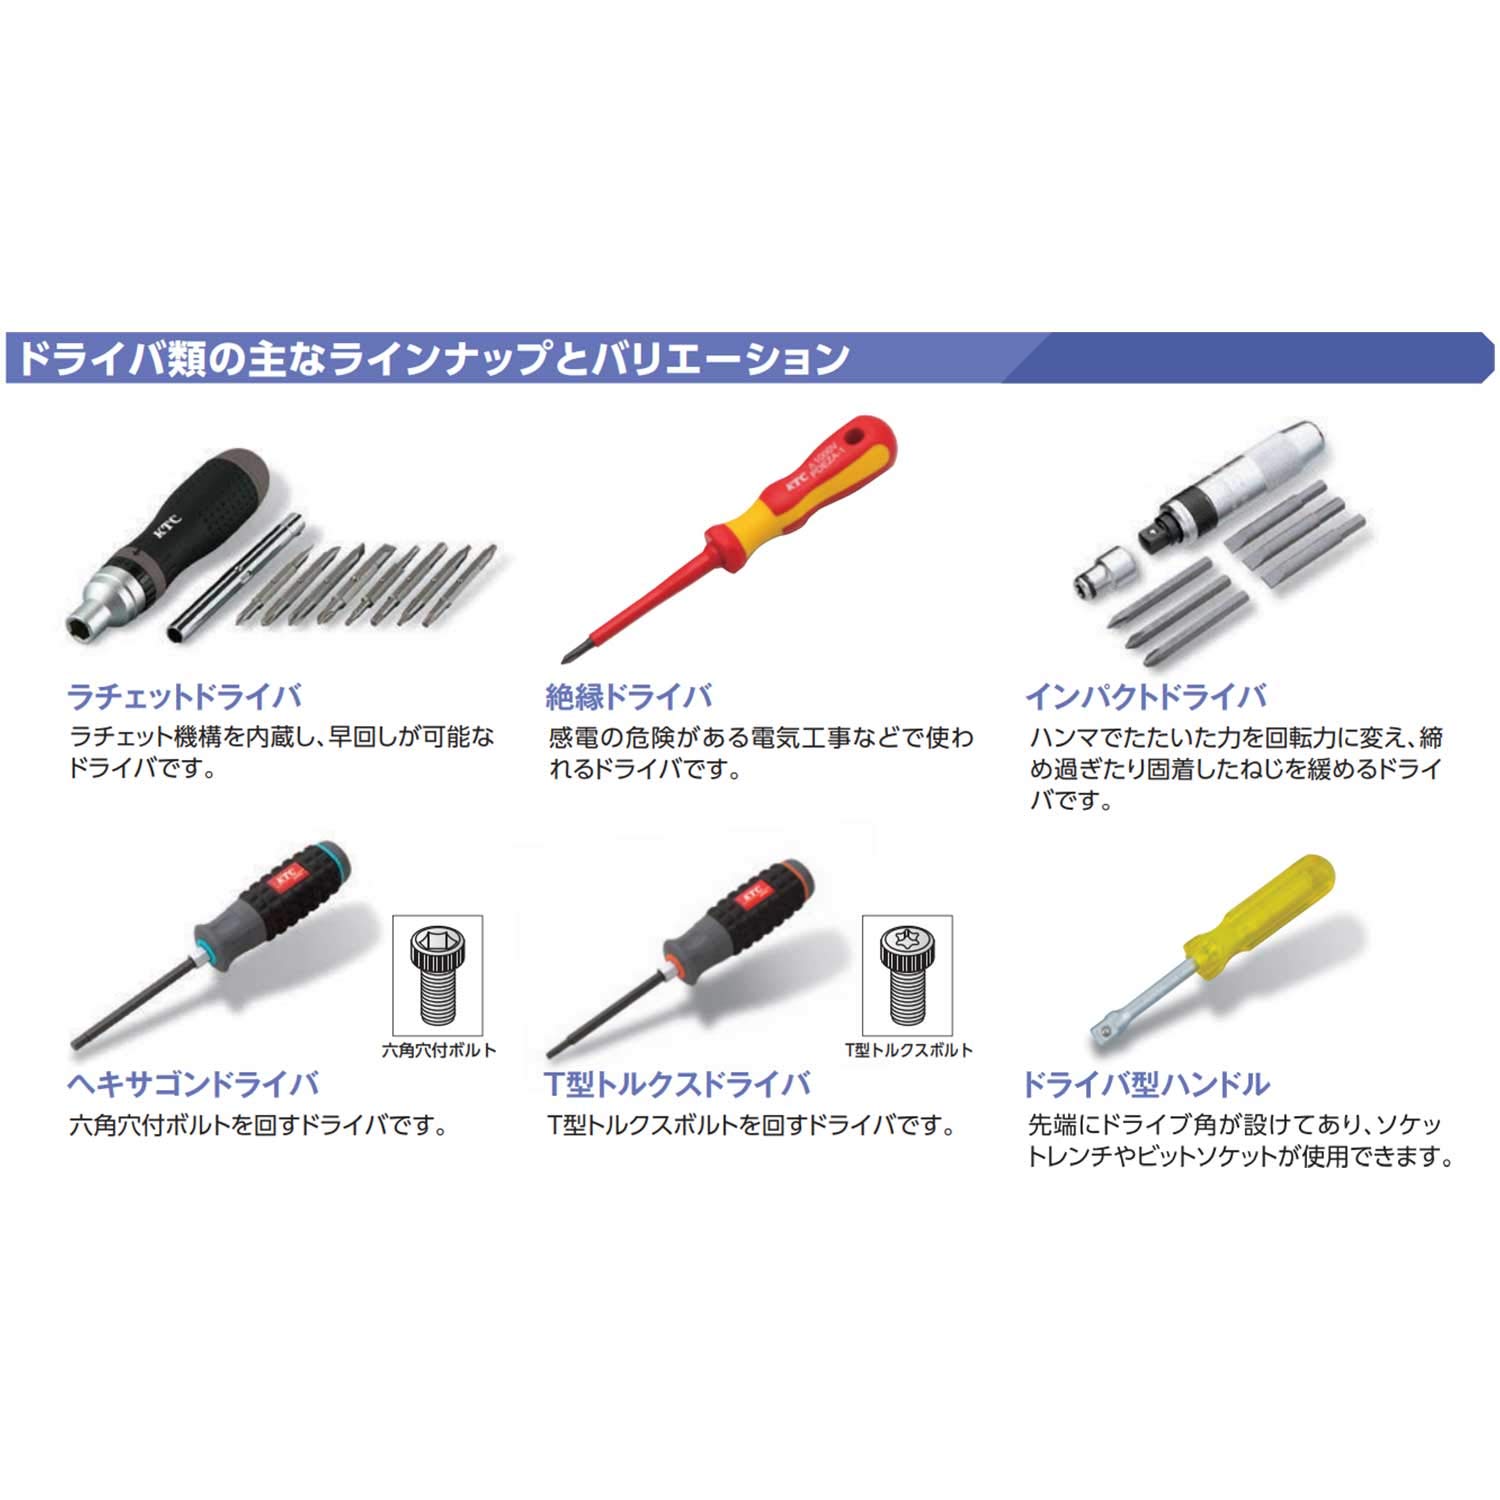  Kyoto machine tool (KTC) resin pattern Driver minus penetrate type 8 minus D1M28